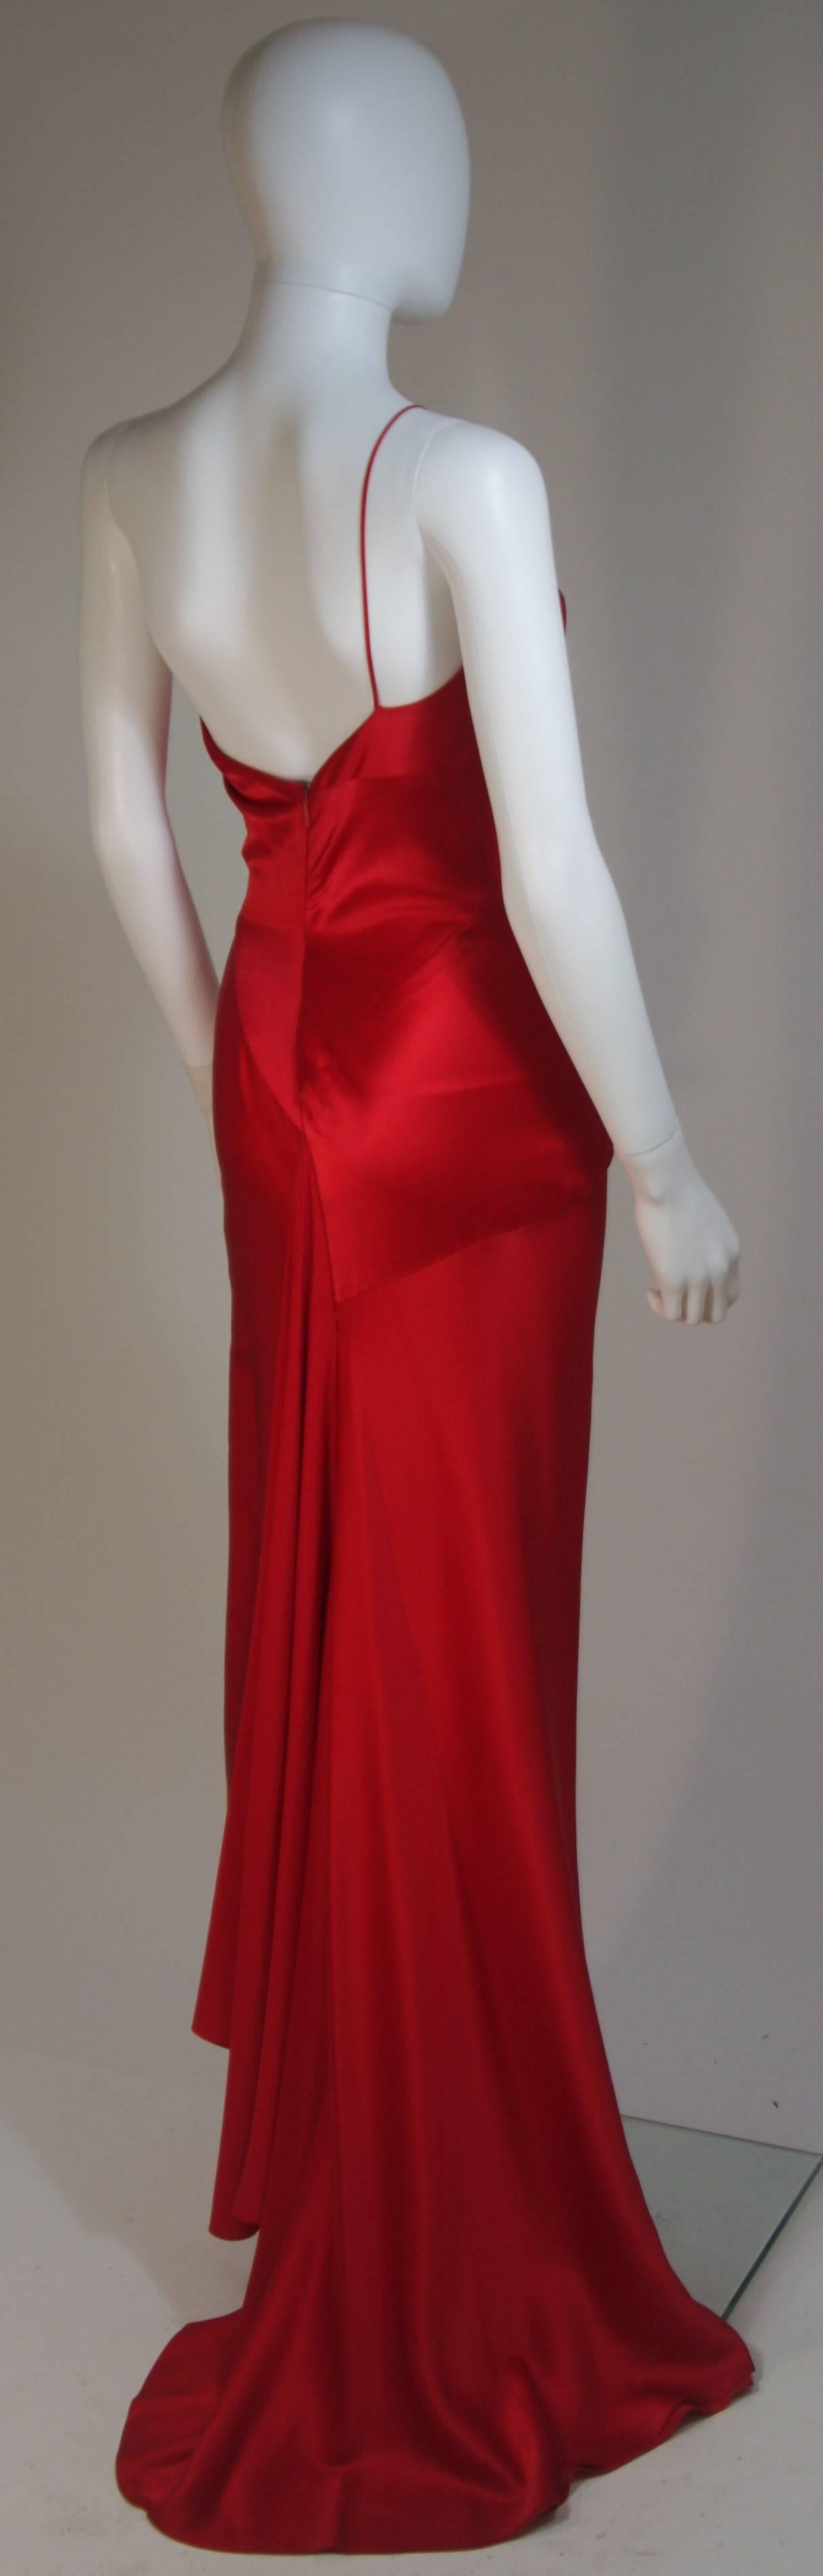 CANTU & CASTILLO Red Silk Bias Cut Asymmetrical Gown Size 2-4 For Sale 3